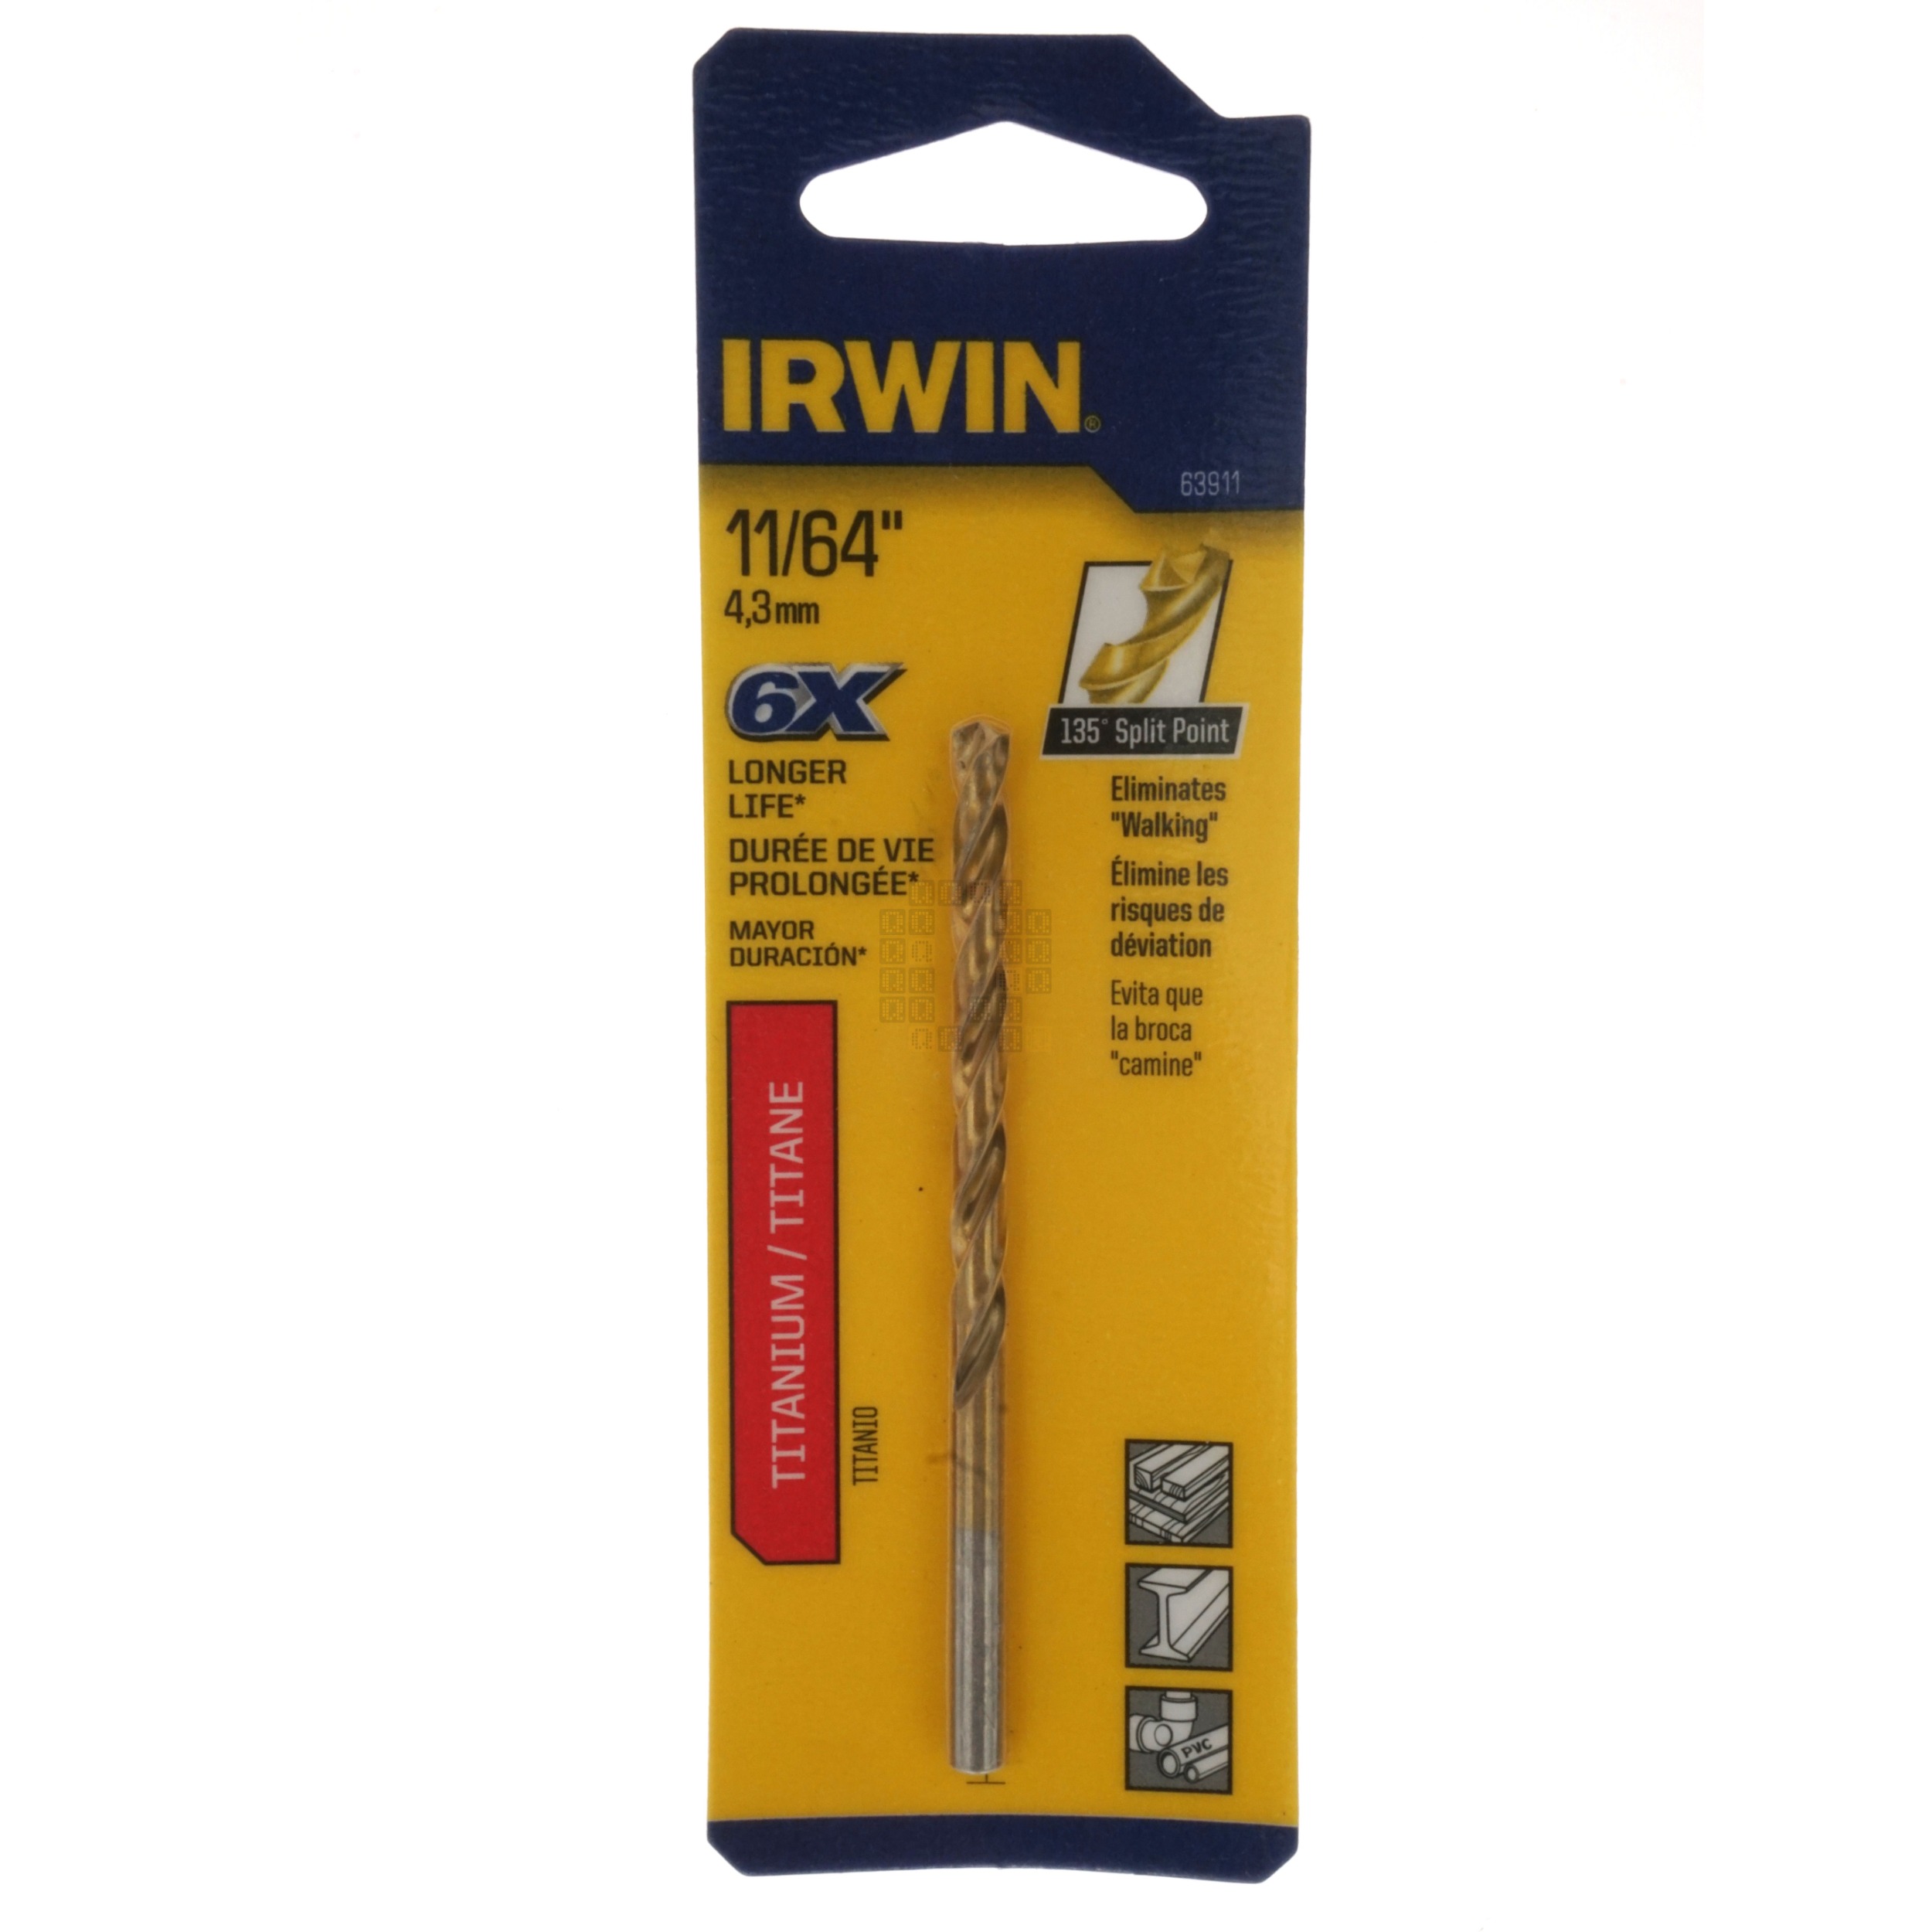 Irwin 63911 11/64" Titanium Nitride Coated 135° Split Point Drill Bit